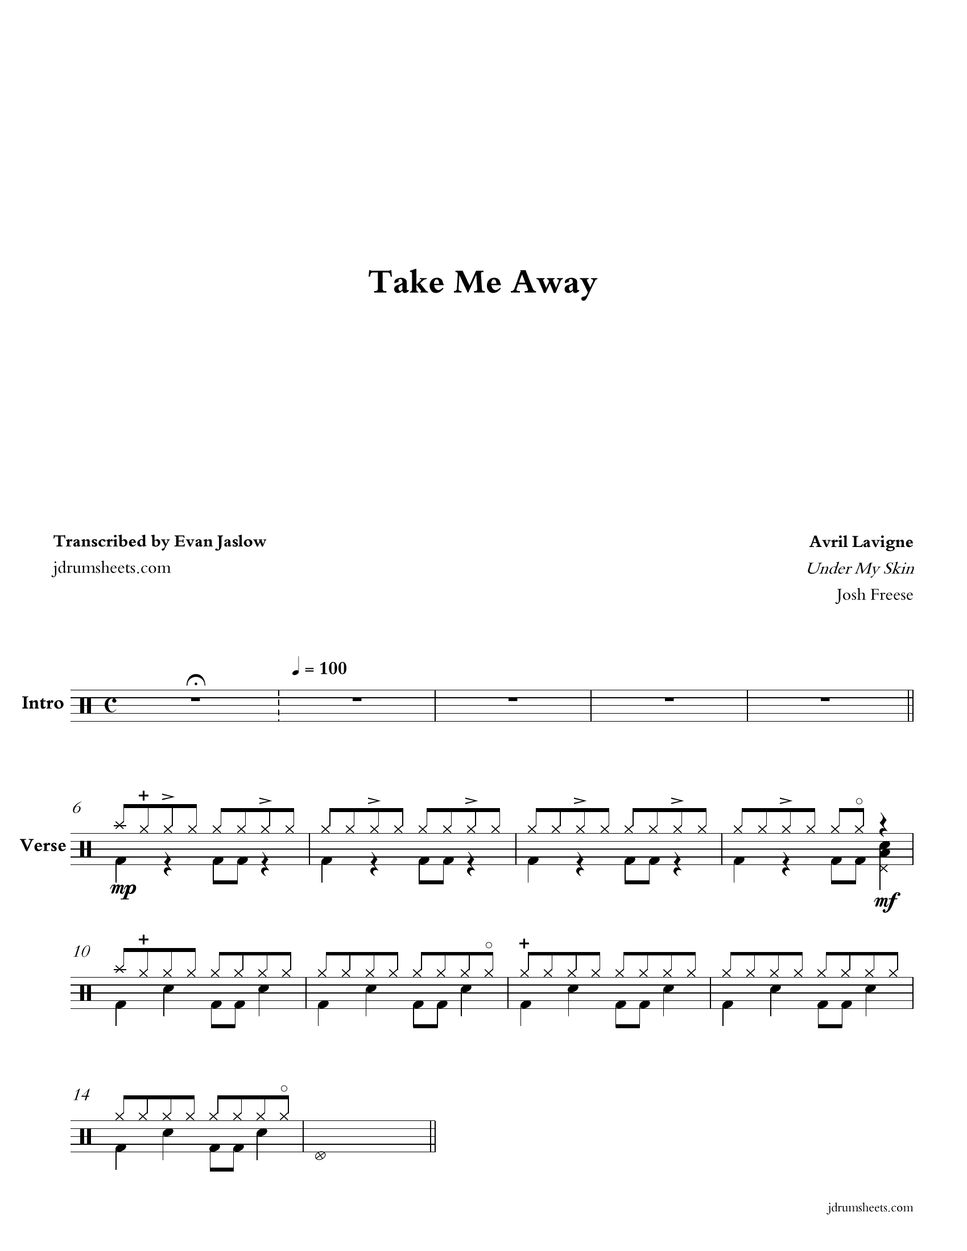 Avril Lavigne - Take Me Away by Evan Aria Serenity